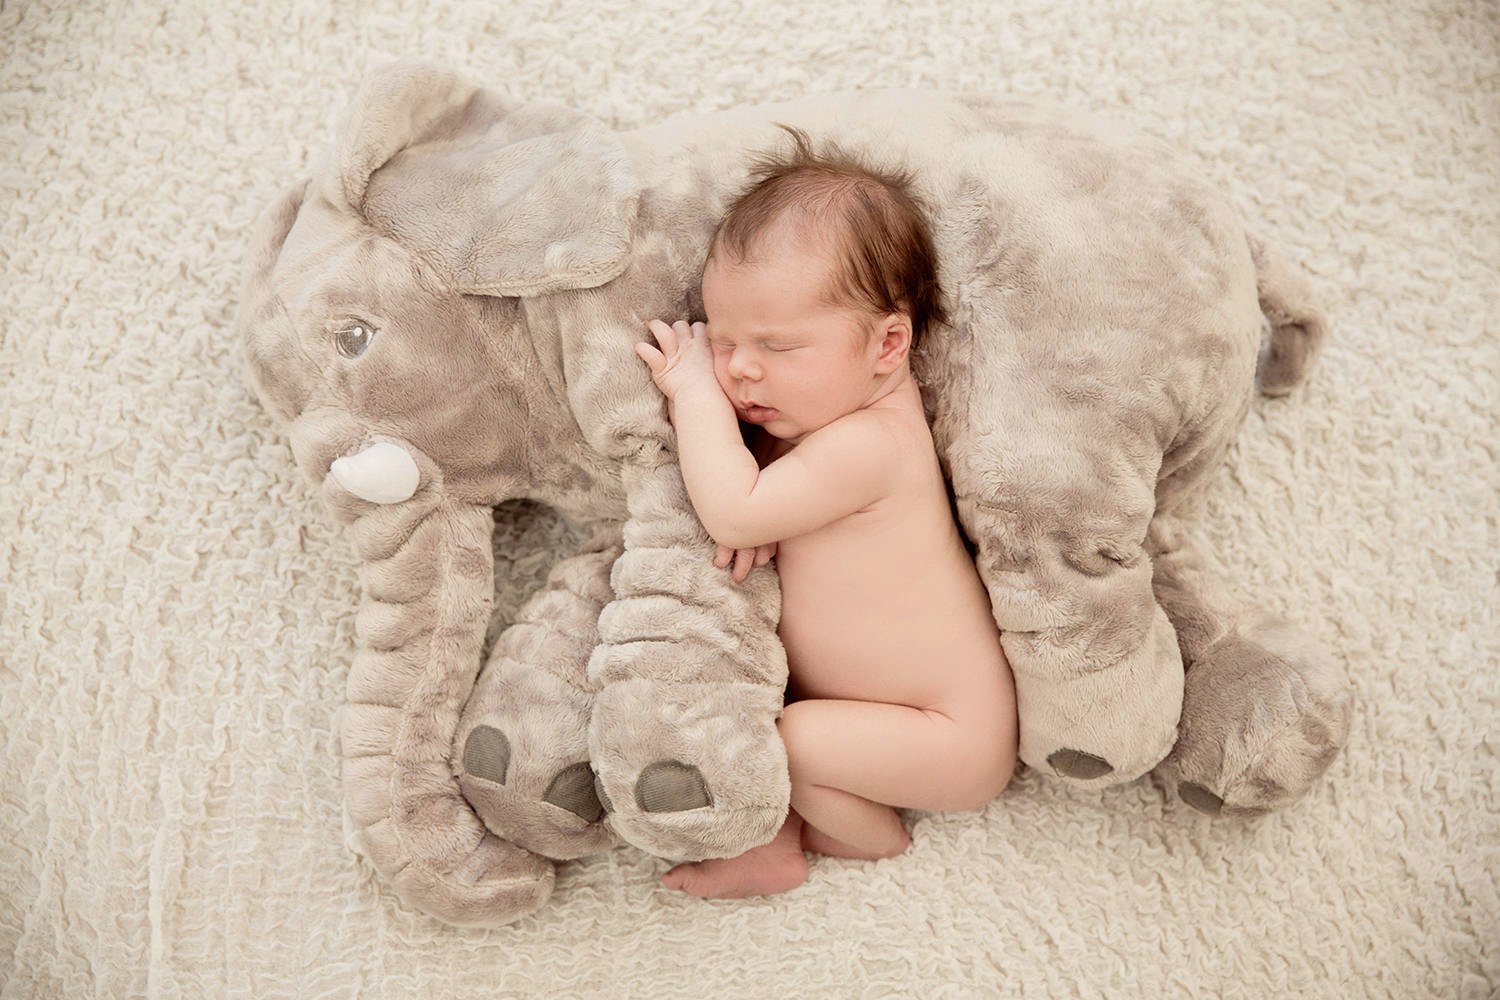 san diego newborn photographer | newborn baby with a stuffed elephant